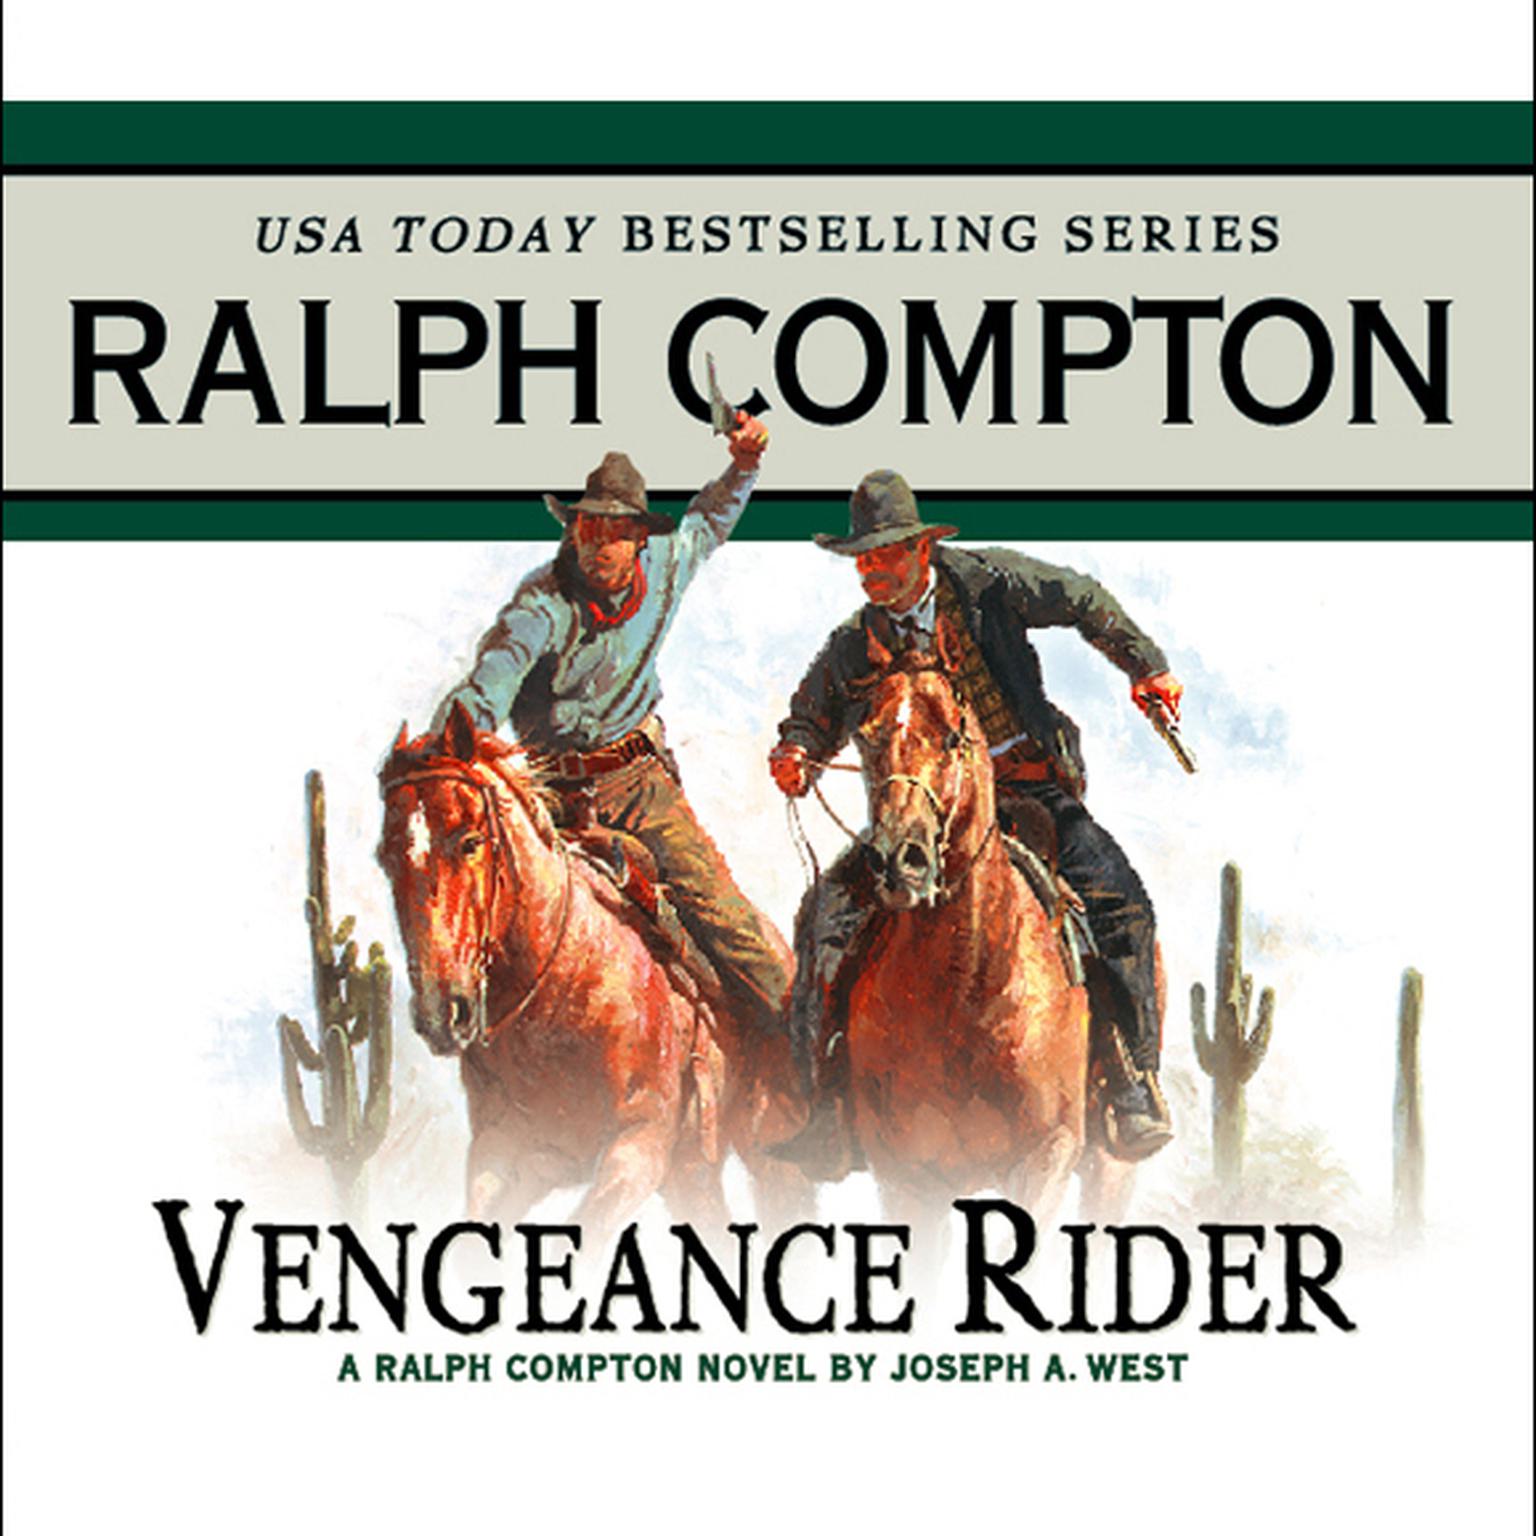 Vengeance Rider (Abridged): A Ralph Compton Novel by Joseph A. West Audiobook, by Ralph Compton